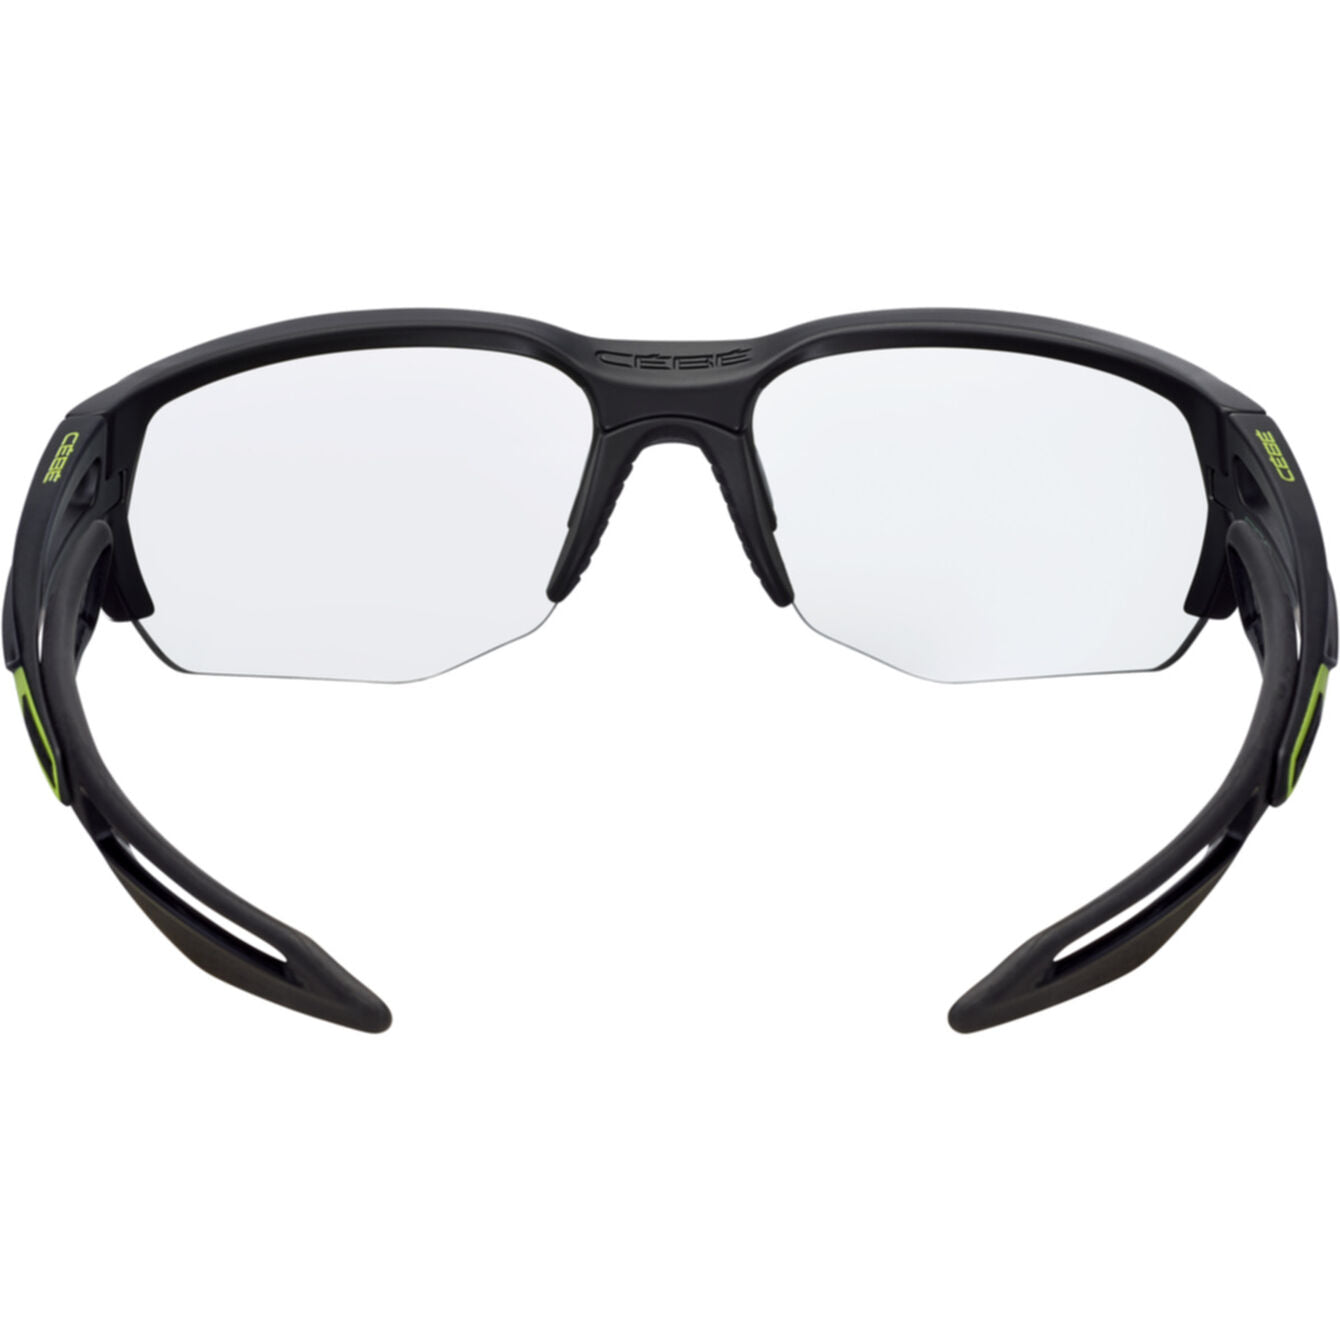 Cebe S'TRACK L 2.0 CS12301 - Trail Running Sunglasses